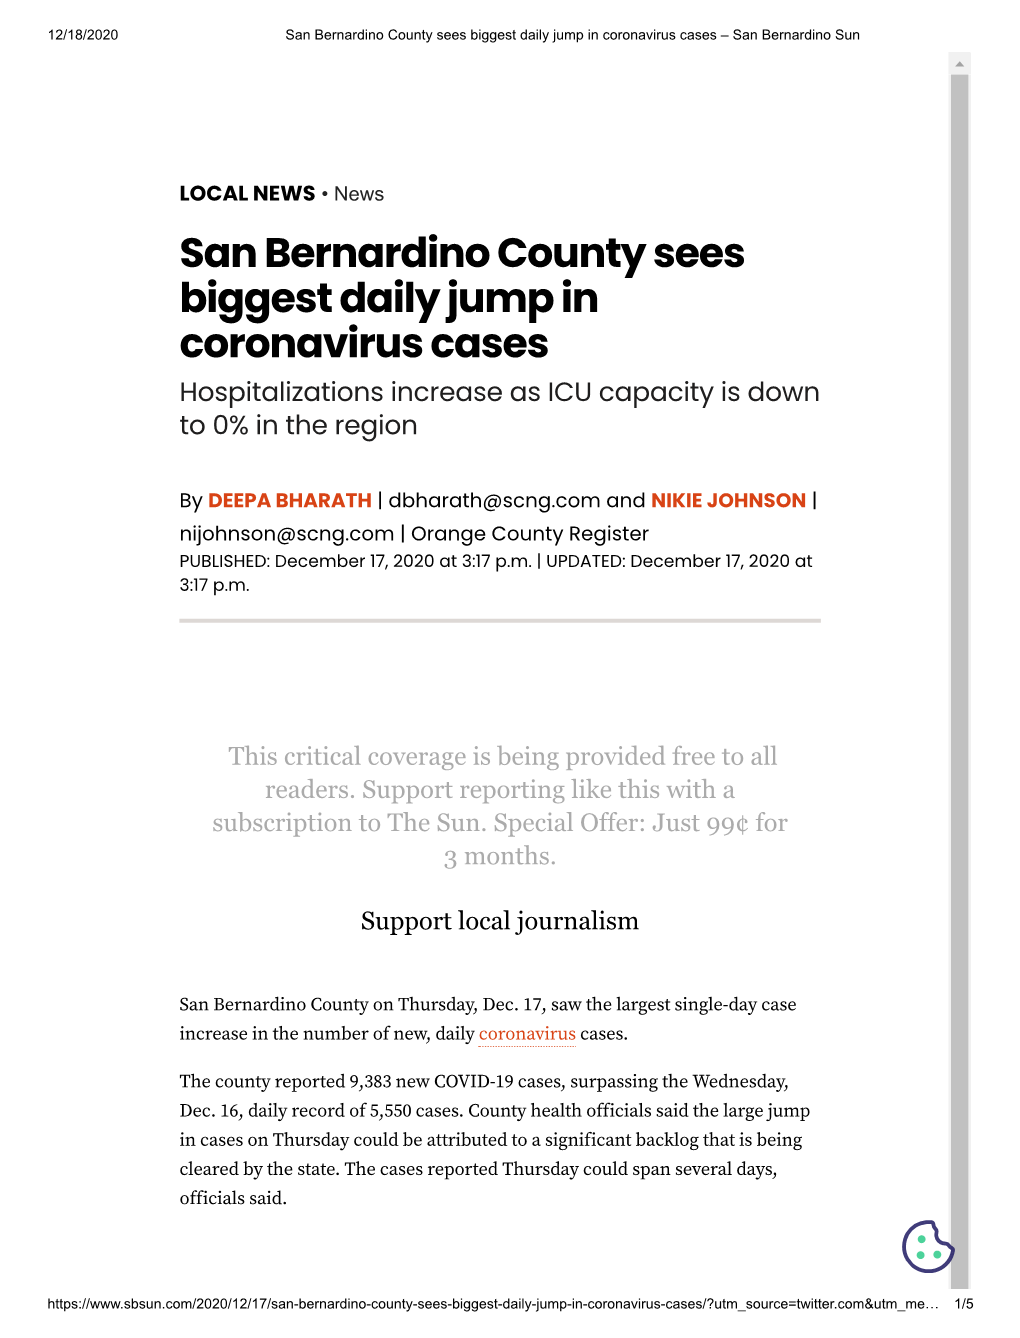 San Bernardino County Sees Biggest Daily Jump in Coronavirus Cases – San Bernardino Sun